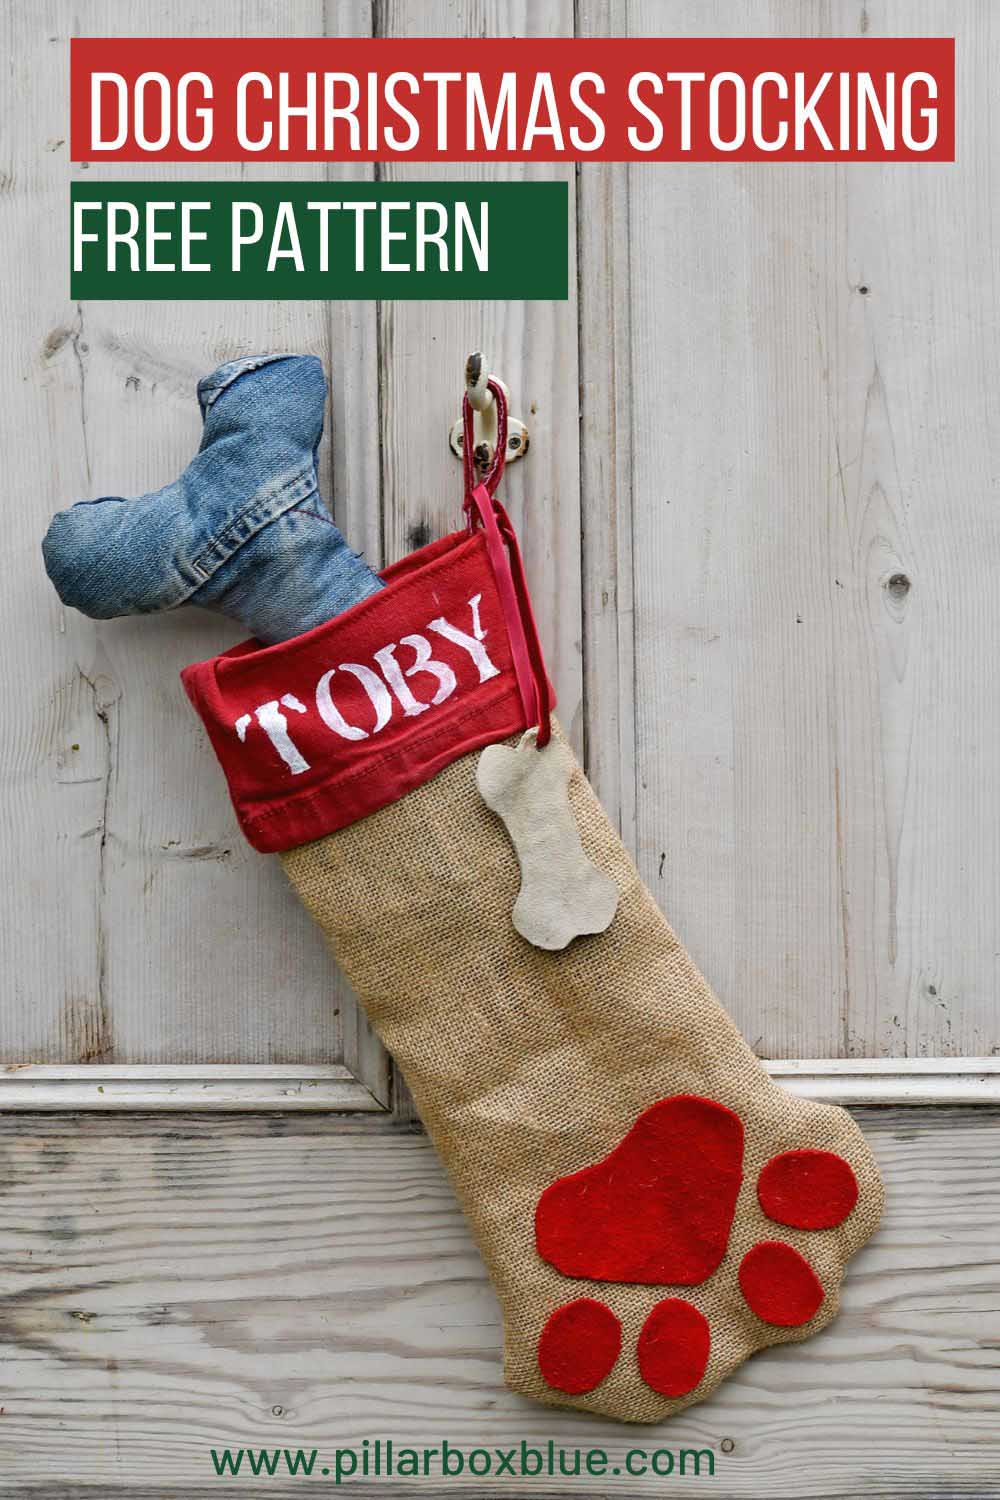 Free dog Christmas stocking pattern